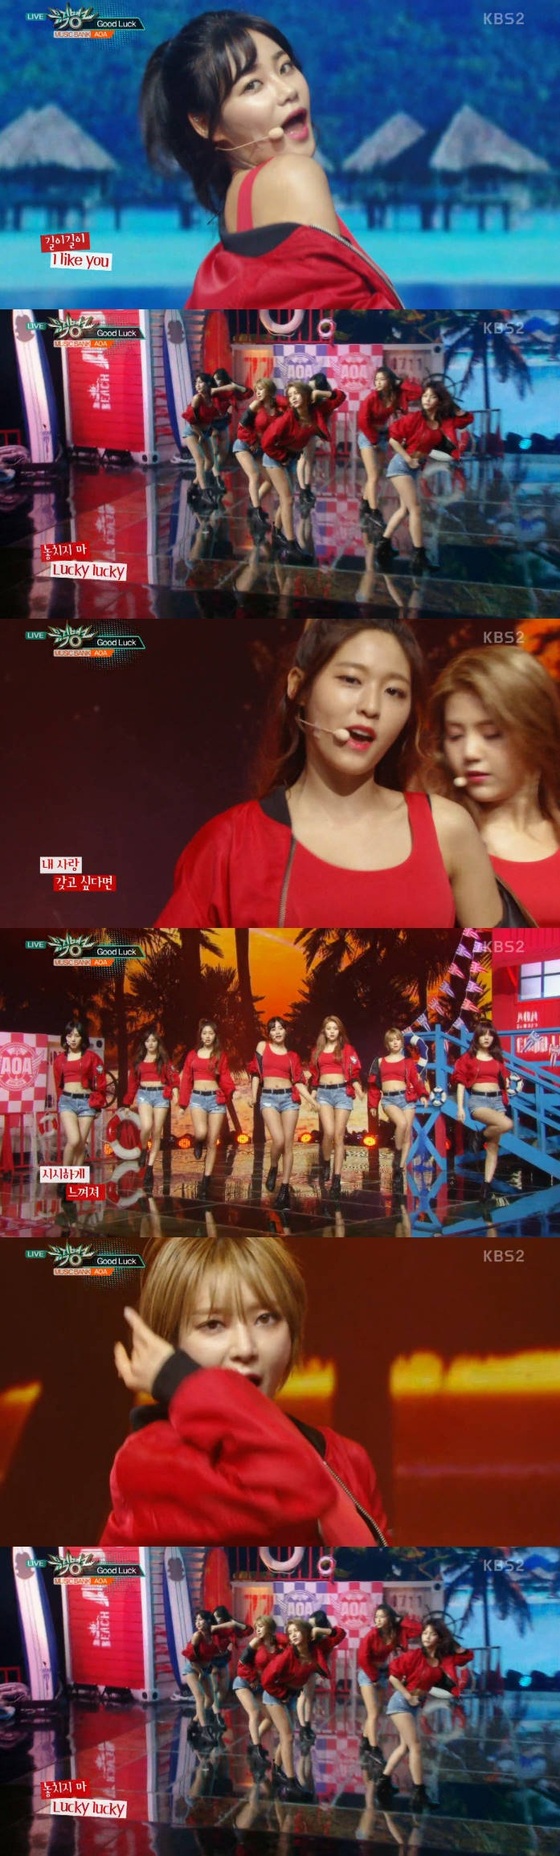 AOA가 '뮤직뱅크'에서 '굿 럭' 무대를 선사했다. © News1star / KBS2 '뮤직뱅크' 캡처